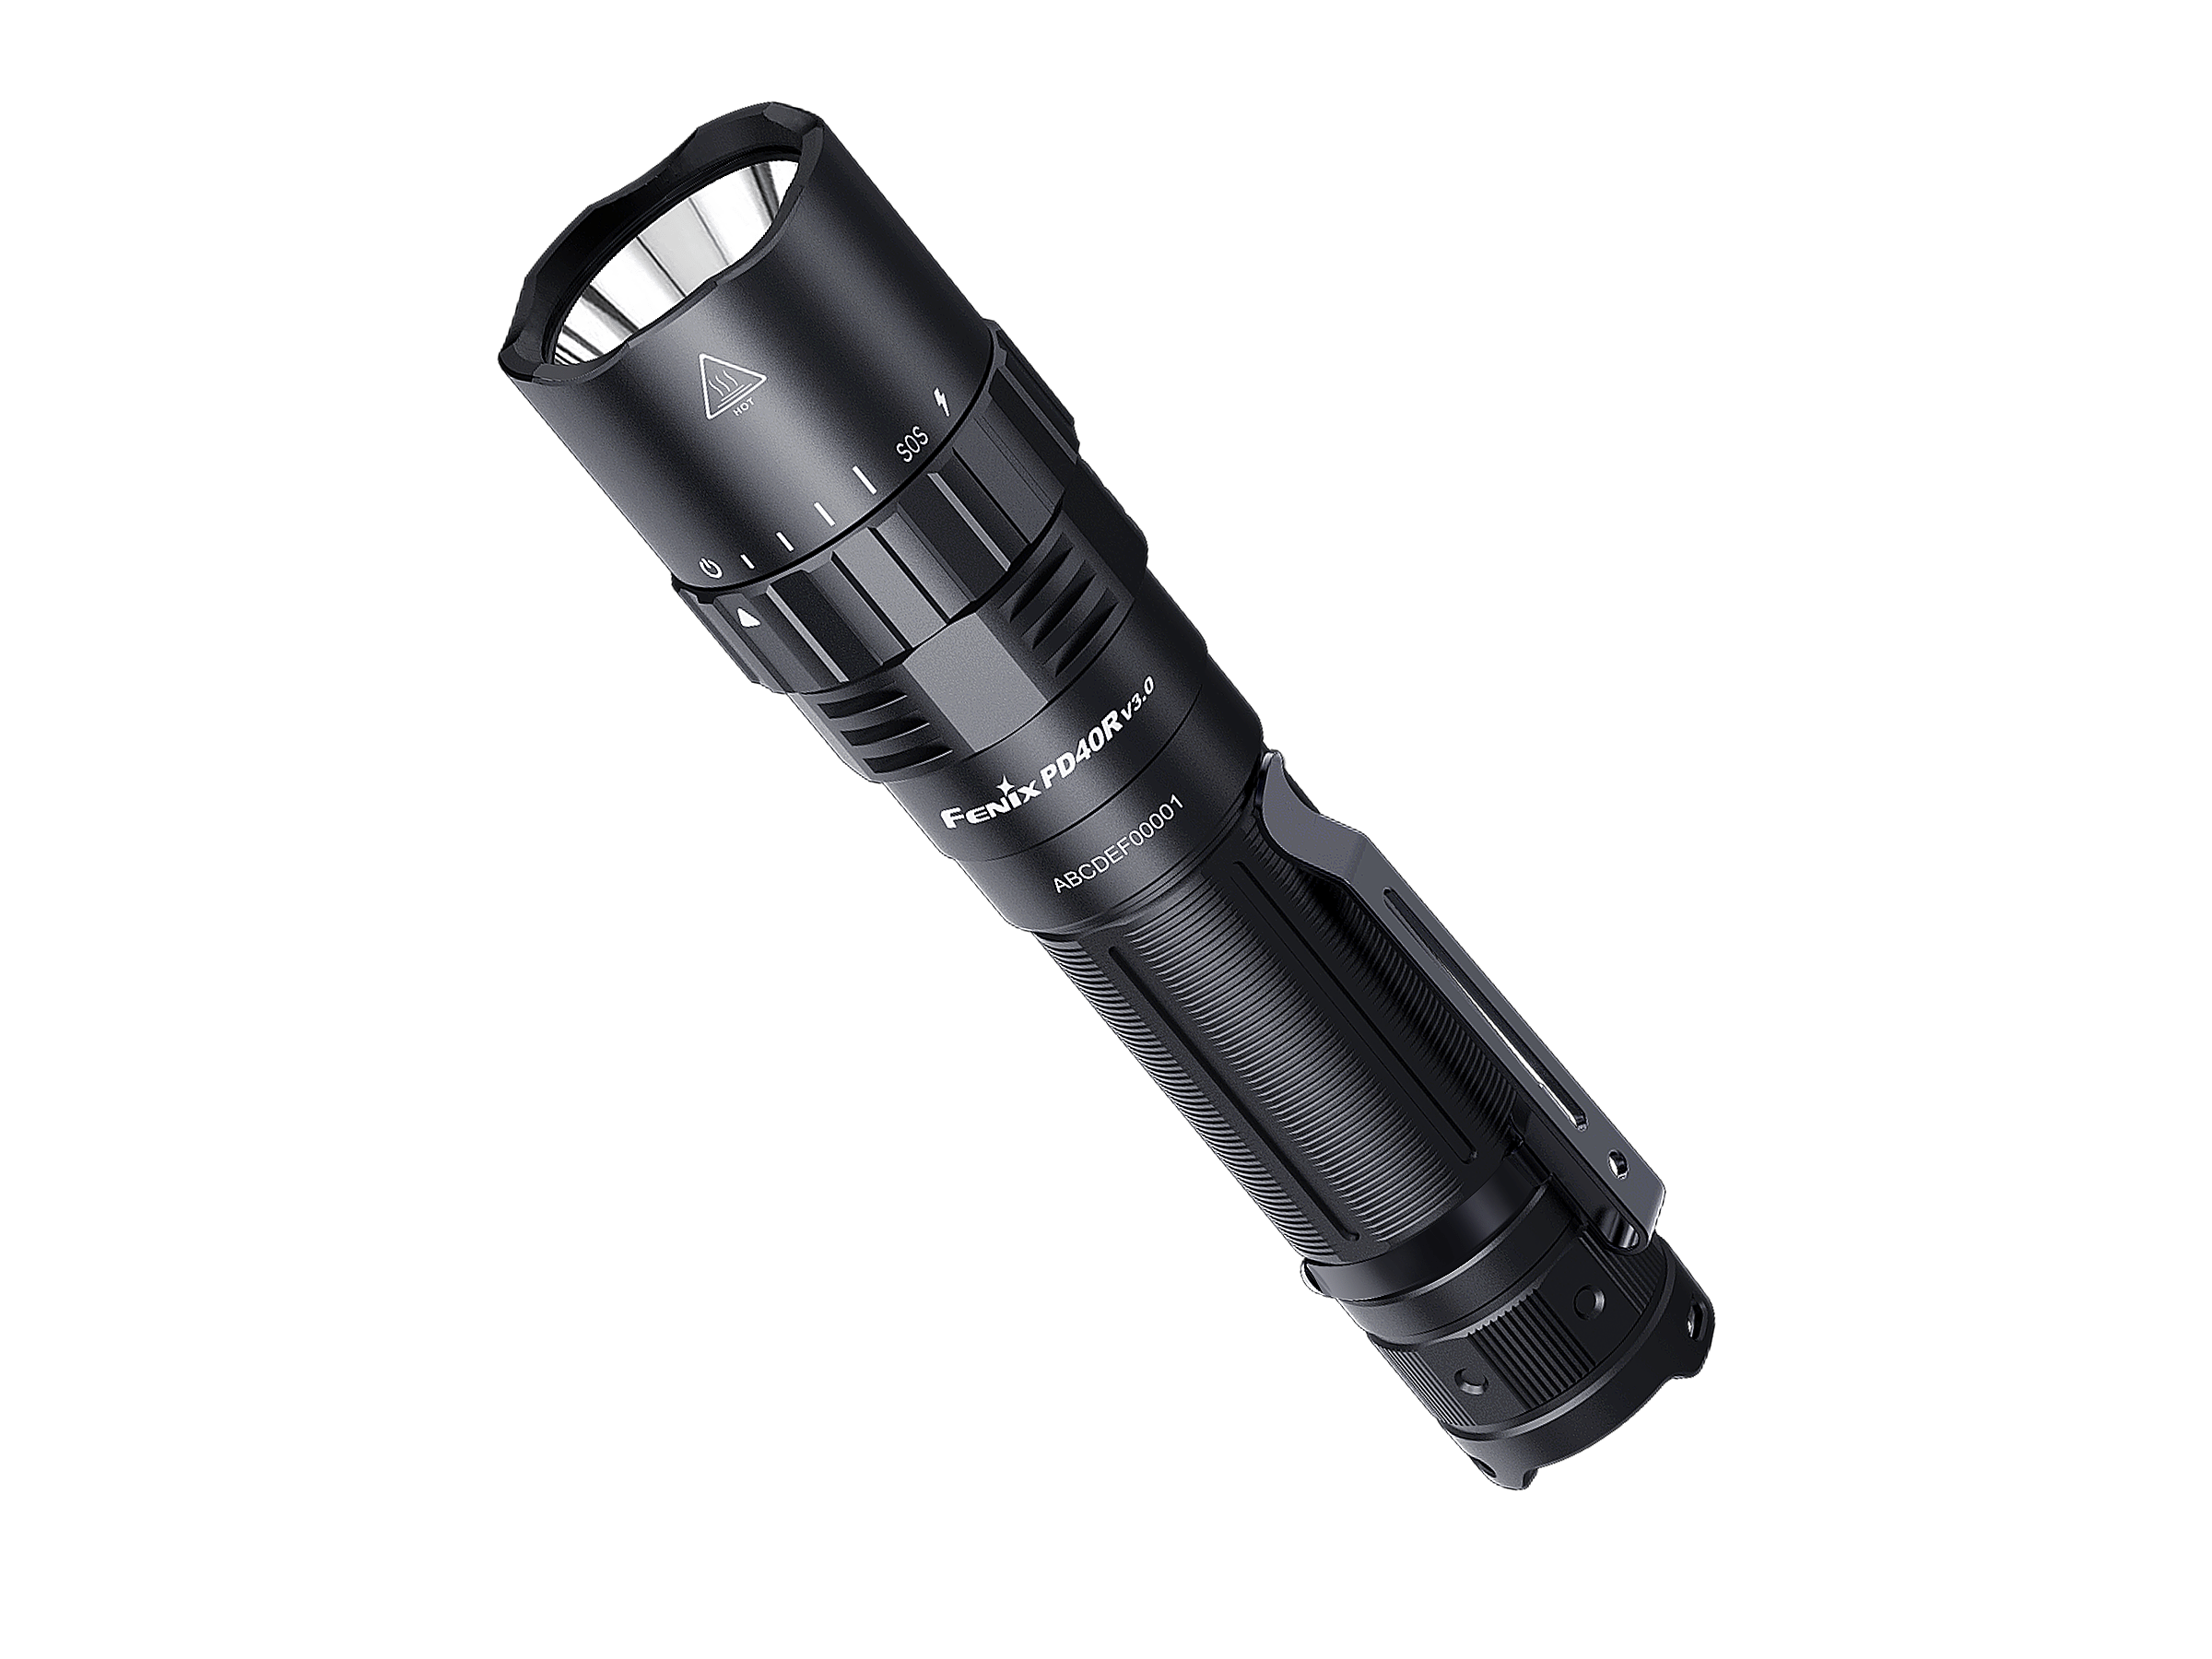 Fenix PD40R V3 Rechargeable Flashlight